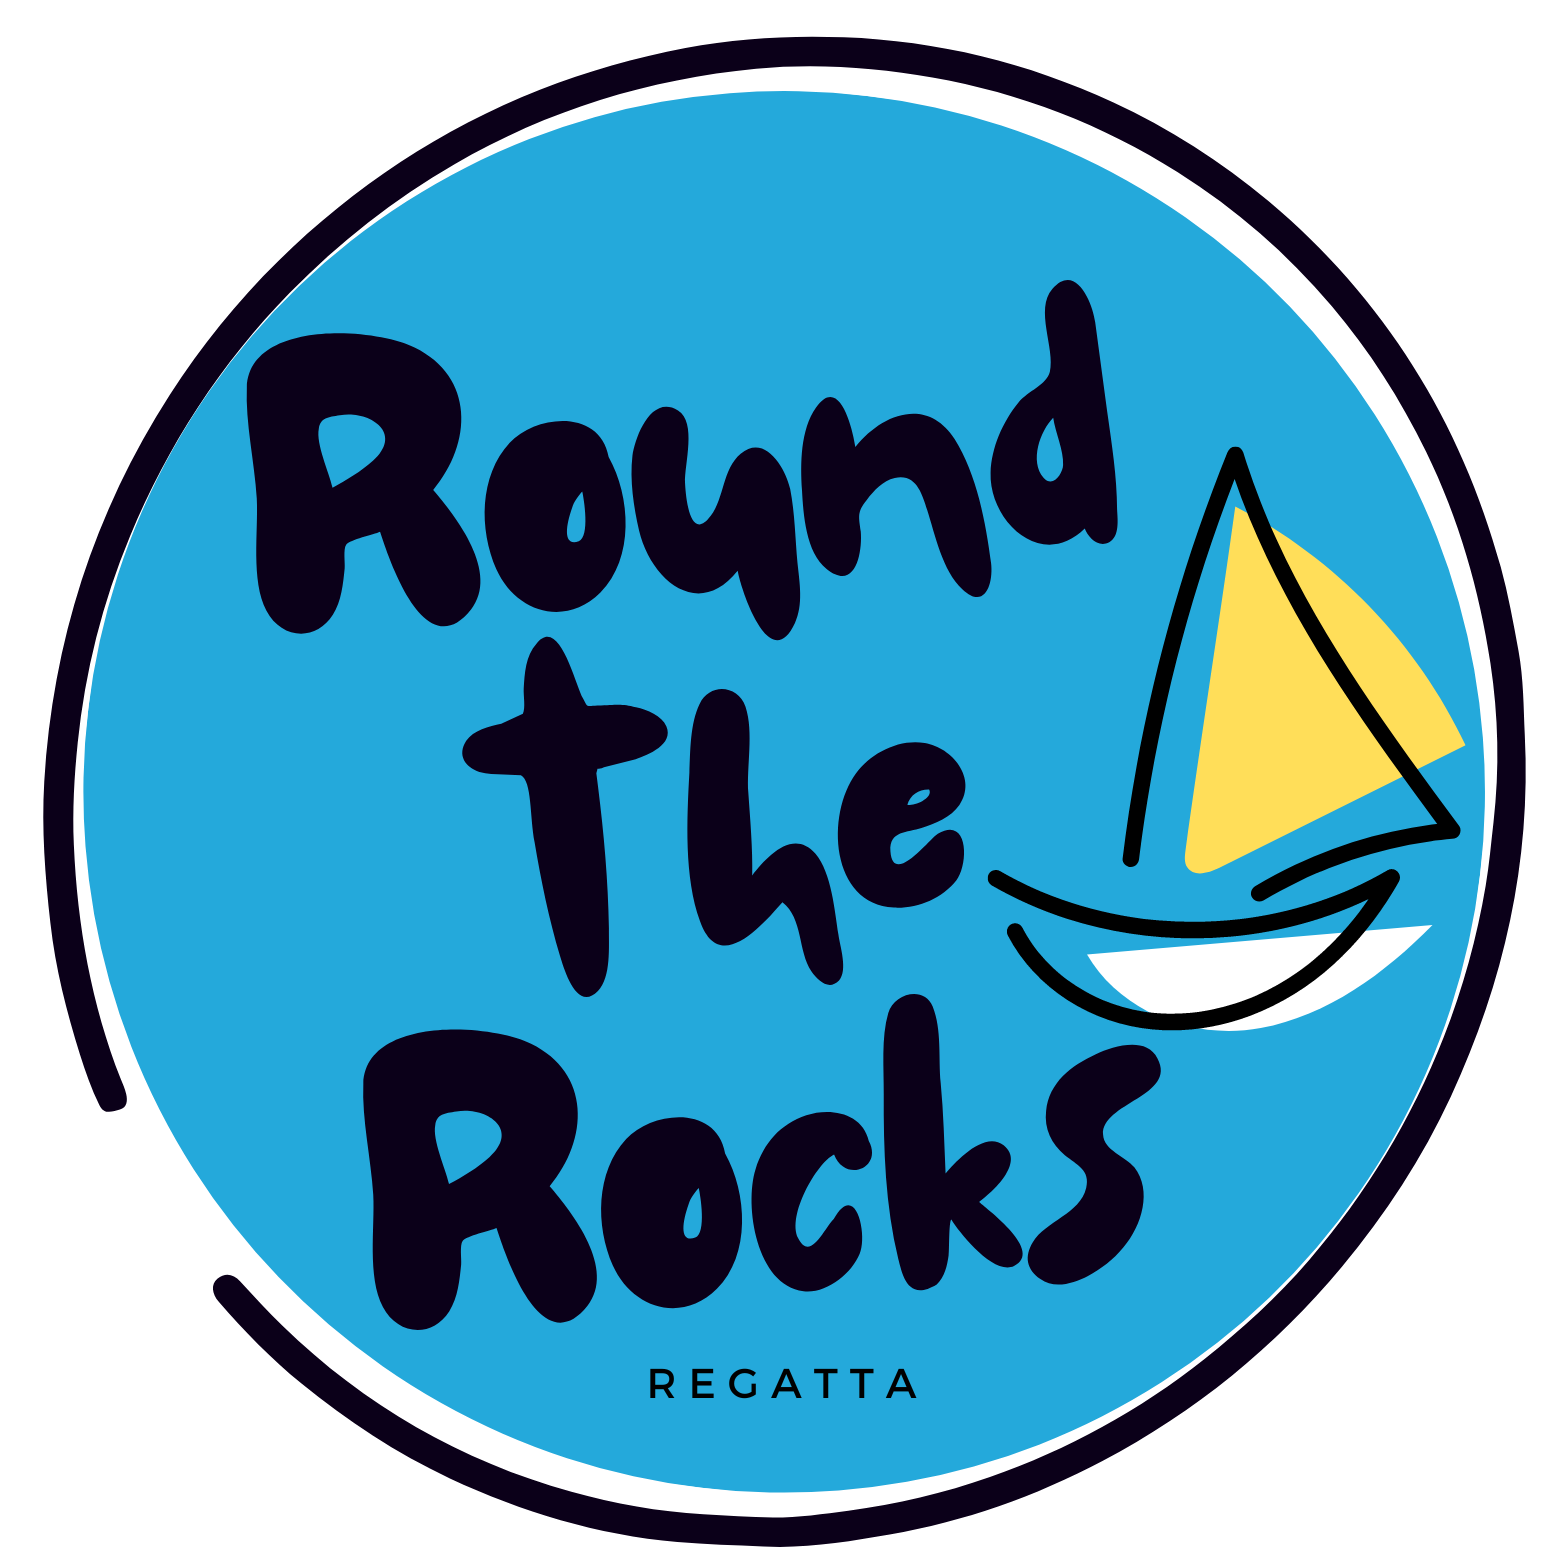 Round the Rocks